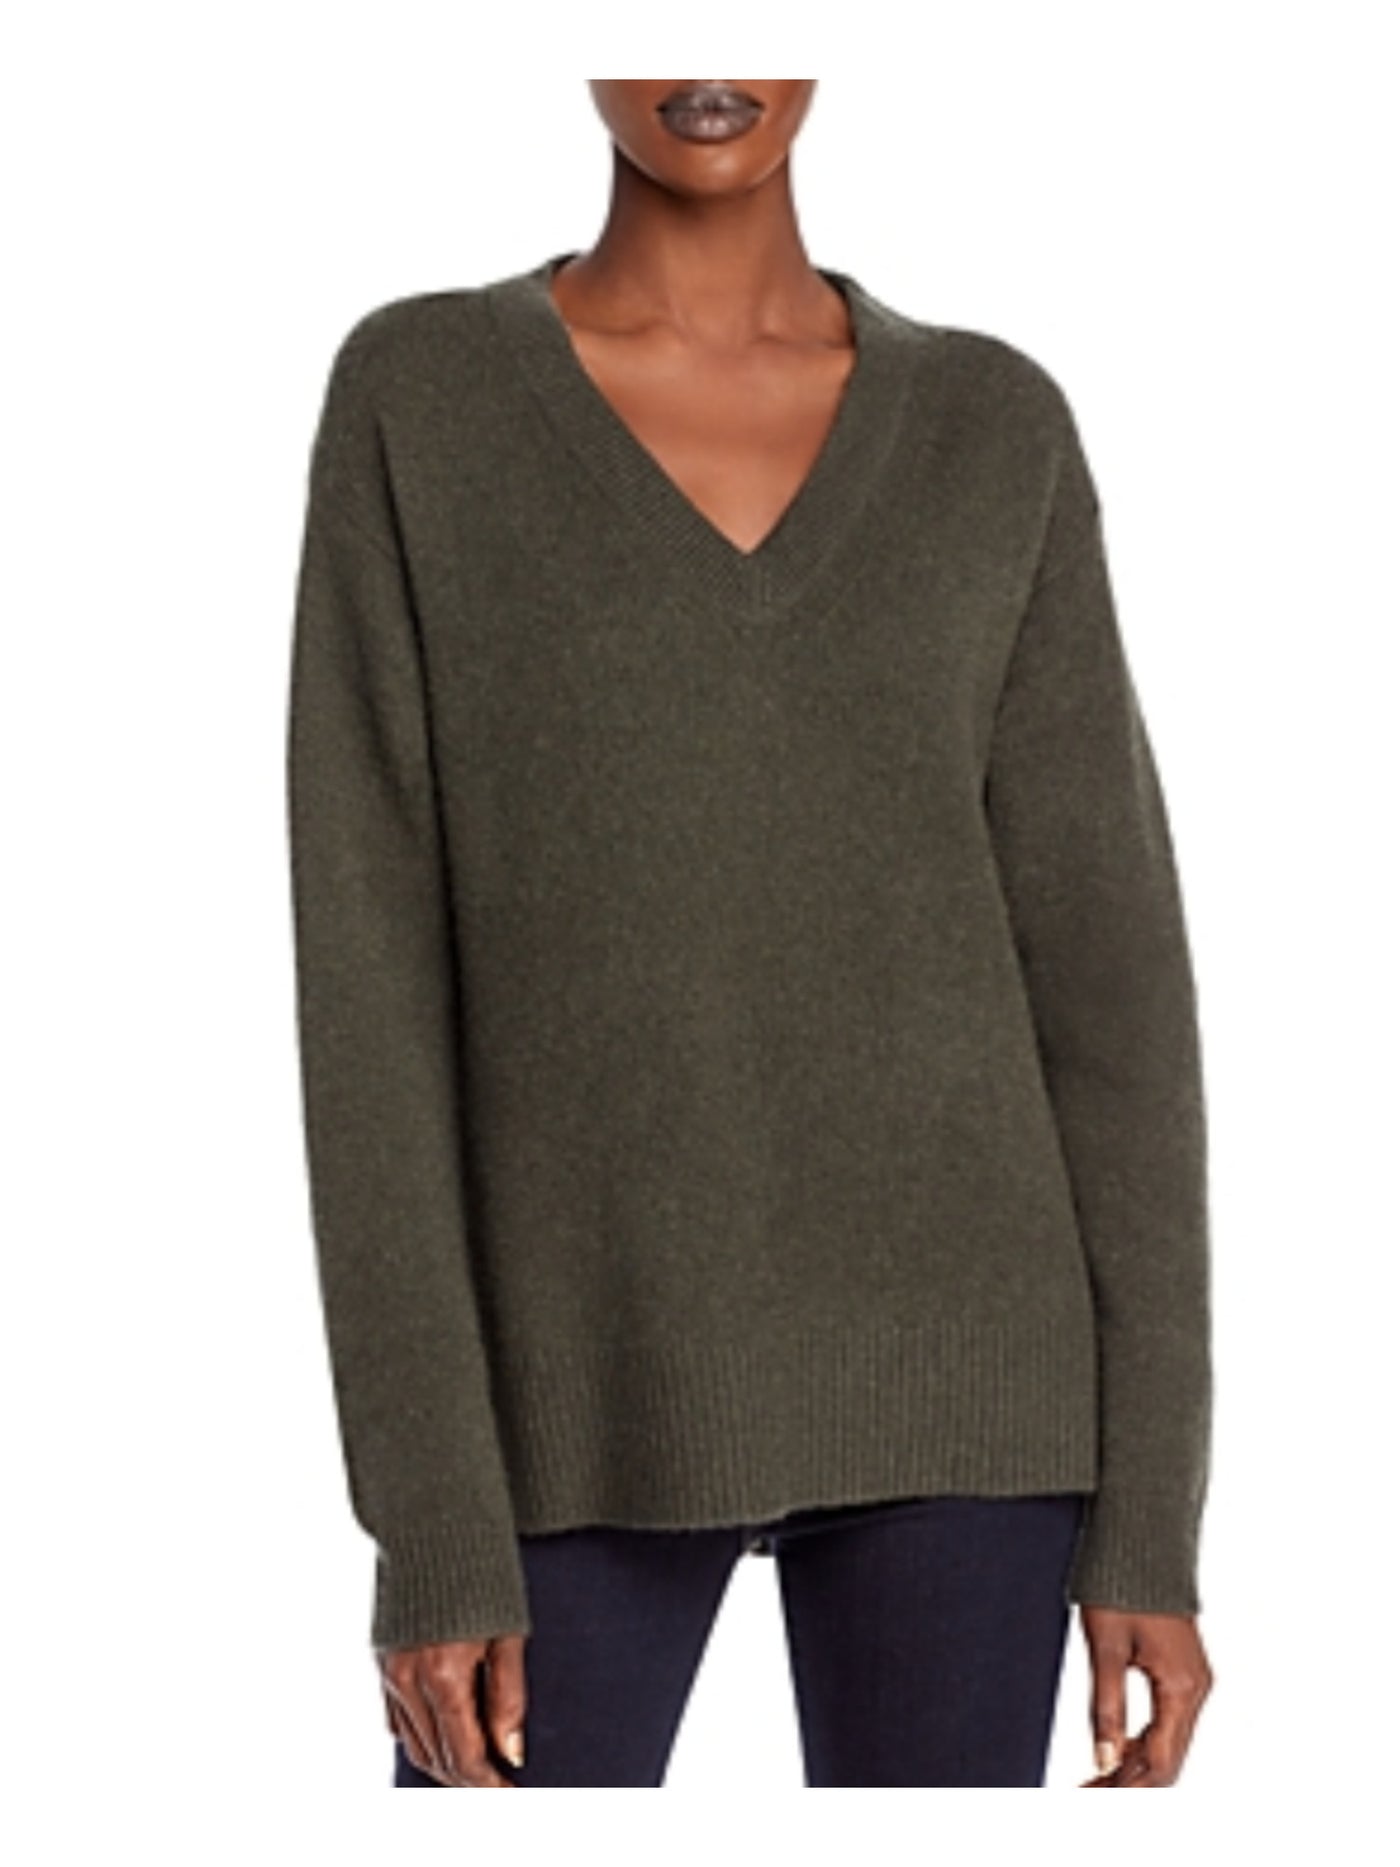 Designer Brand Womens Green Cashmere Long Sleeve V Neck Wear To Work Sweater XS